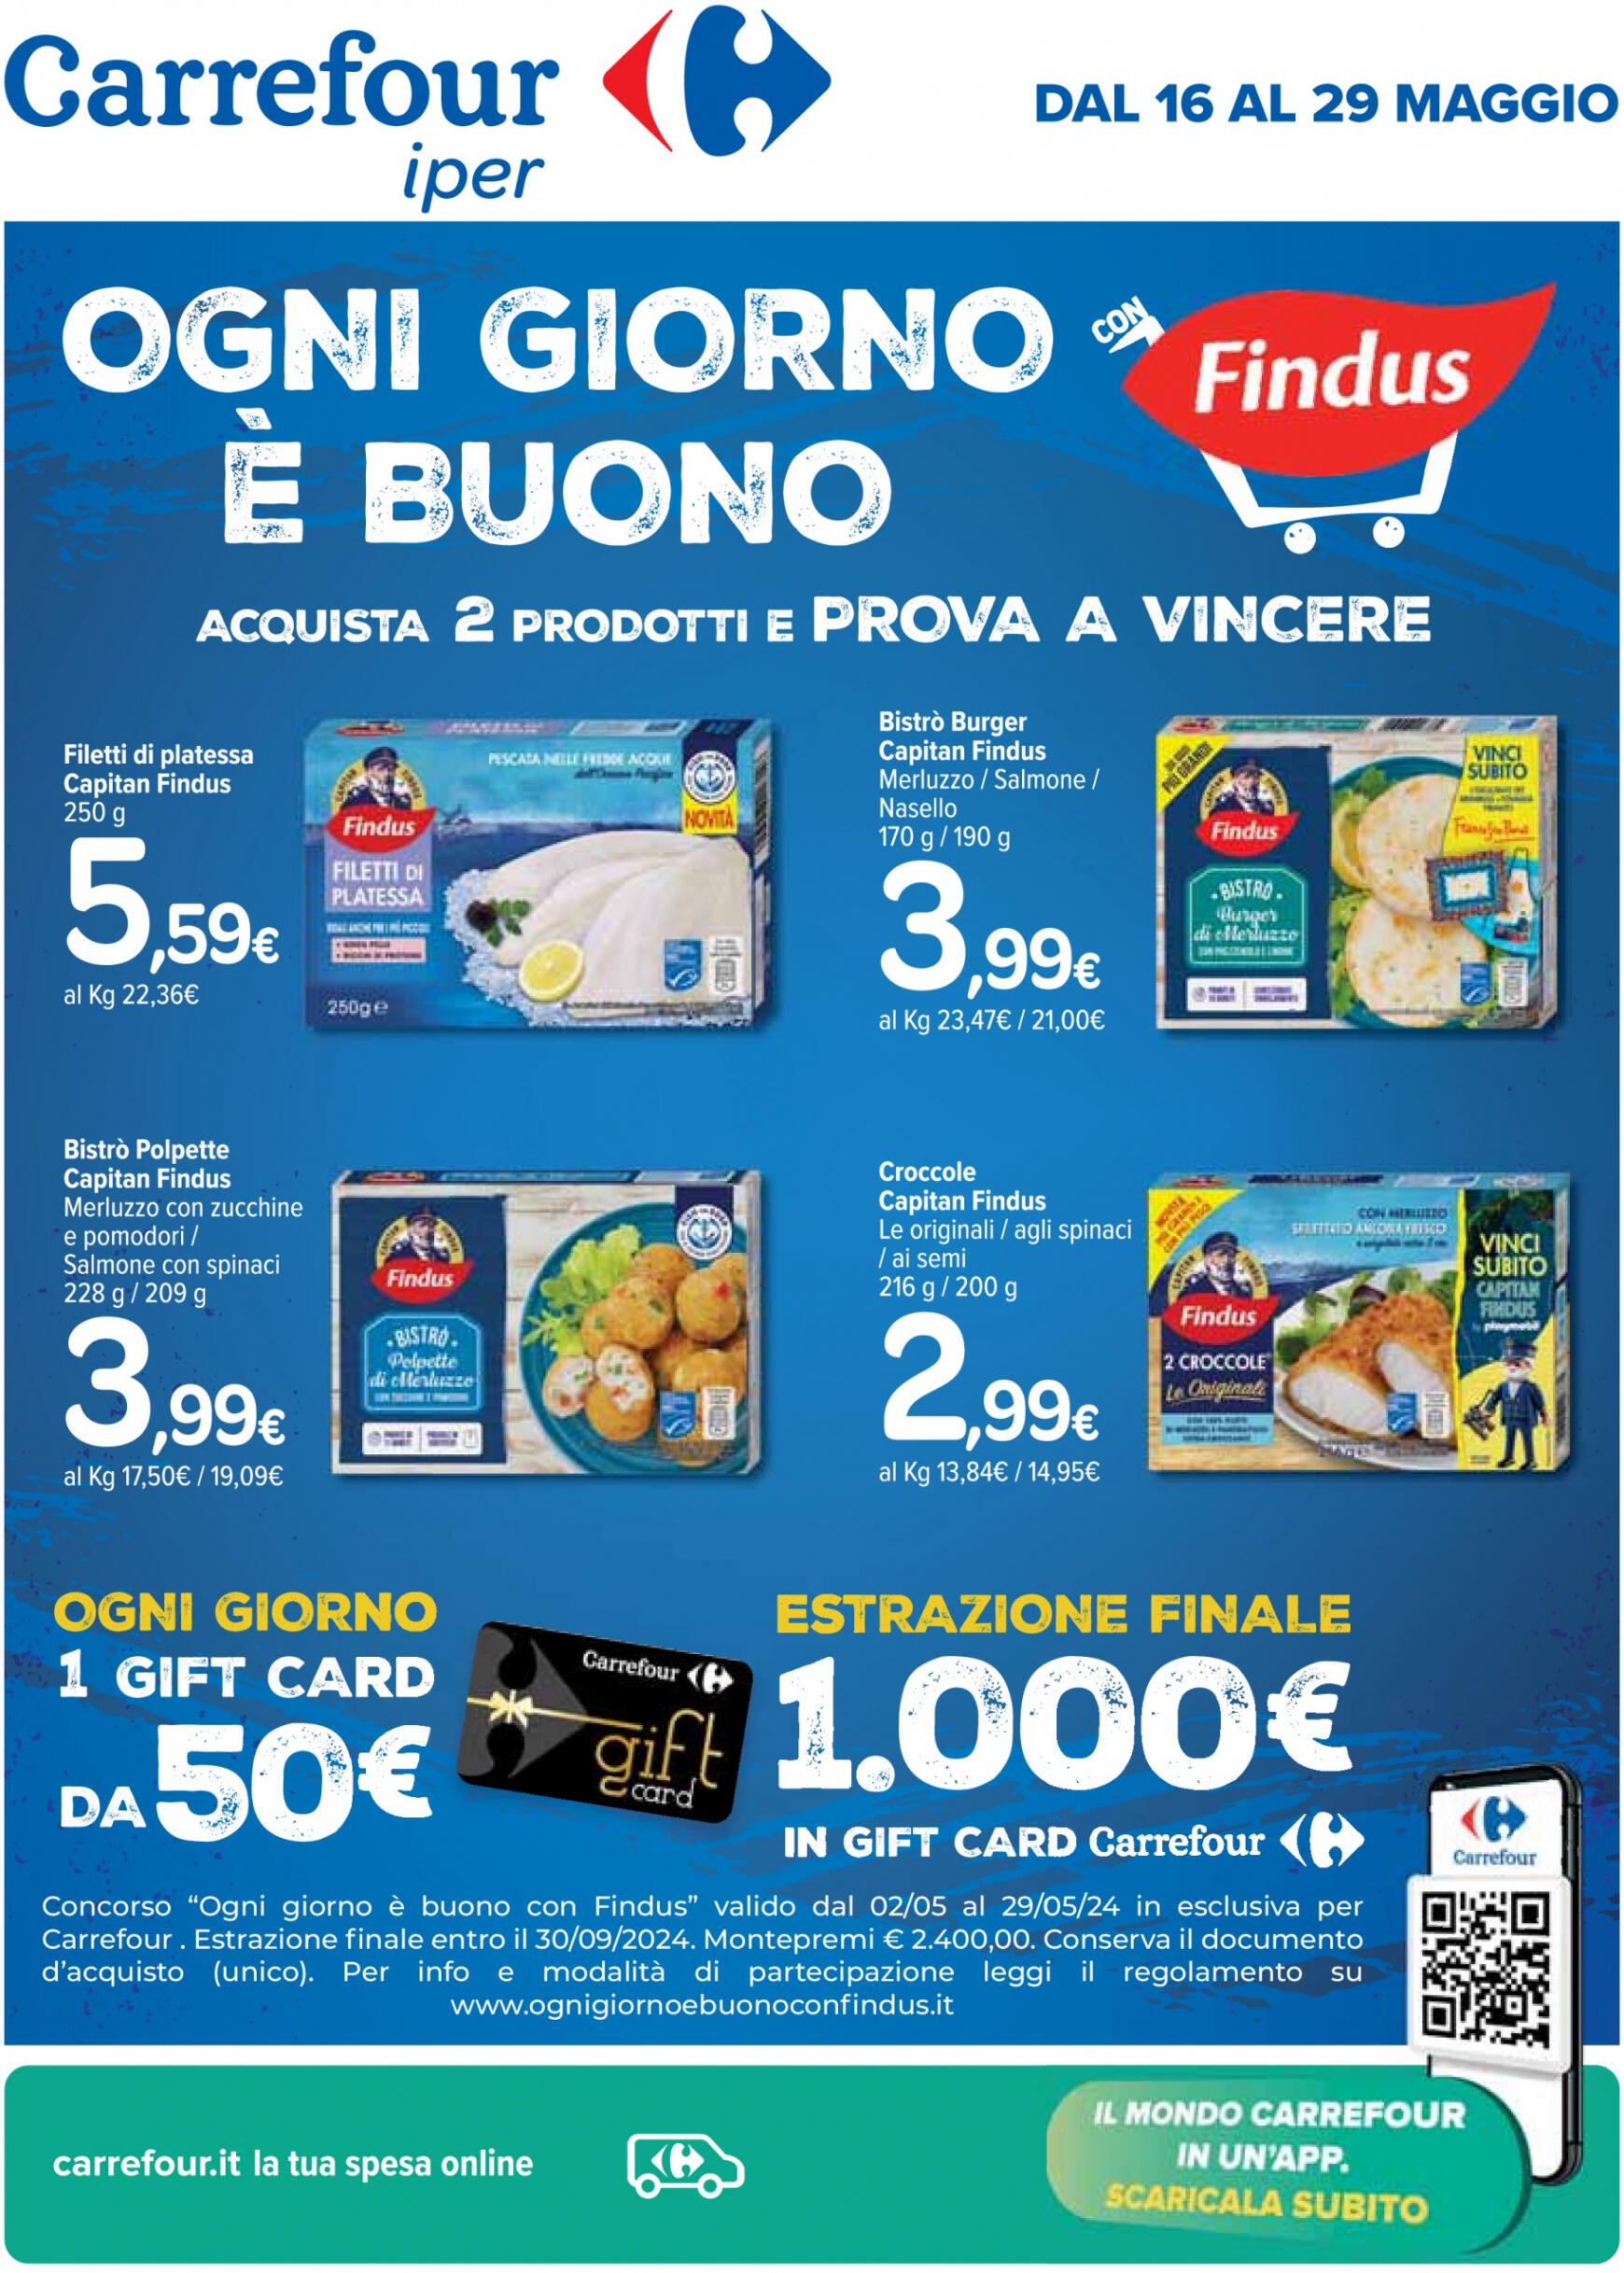 carrefour - Nuovo volantino Carrefour - Speciale Findus 16.05. - 29.05.